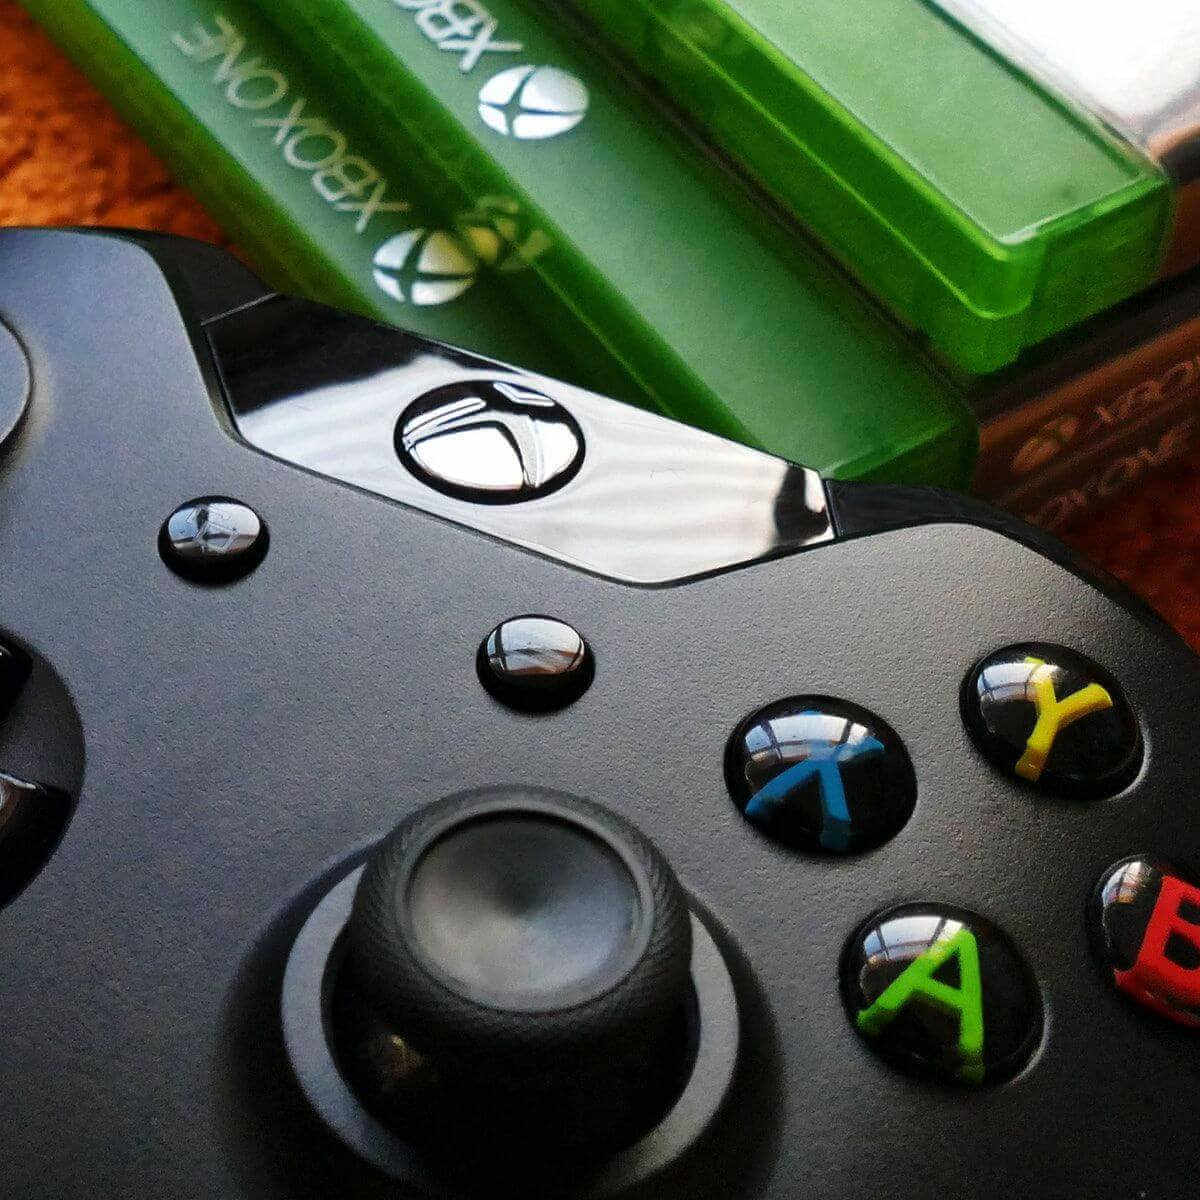 gamepad xbox one Xbox error code 0x82d40003